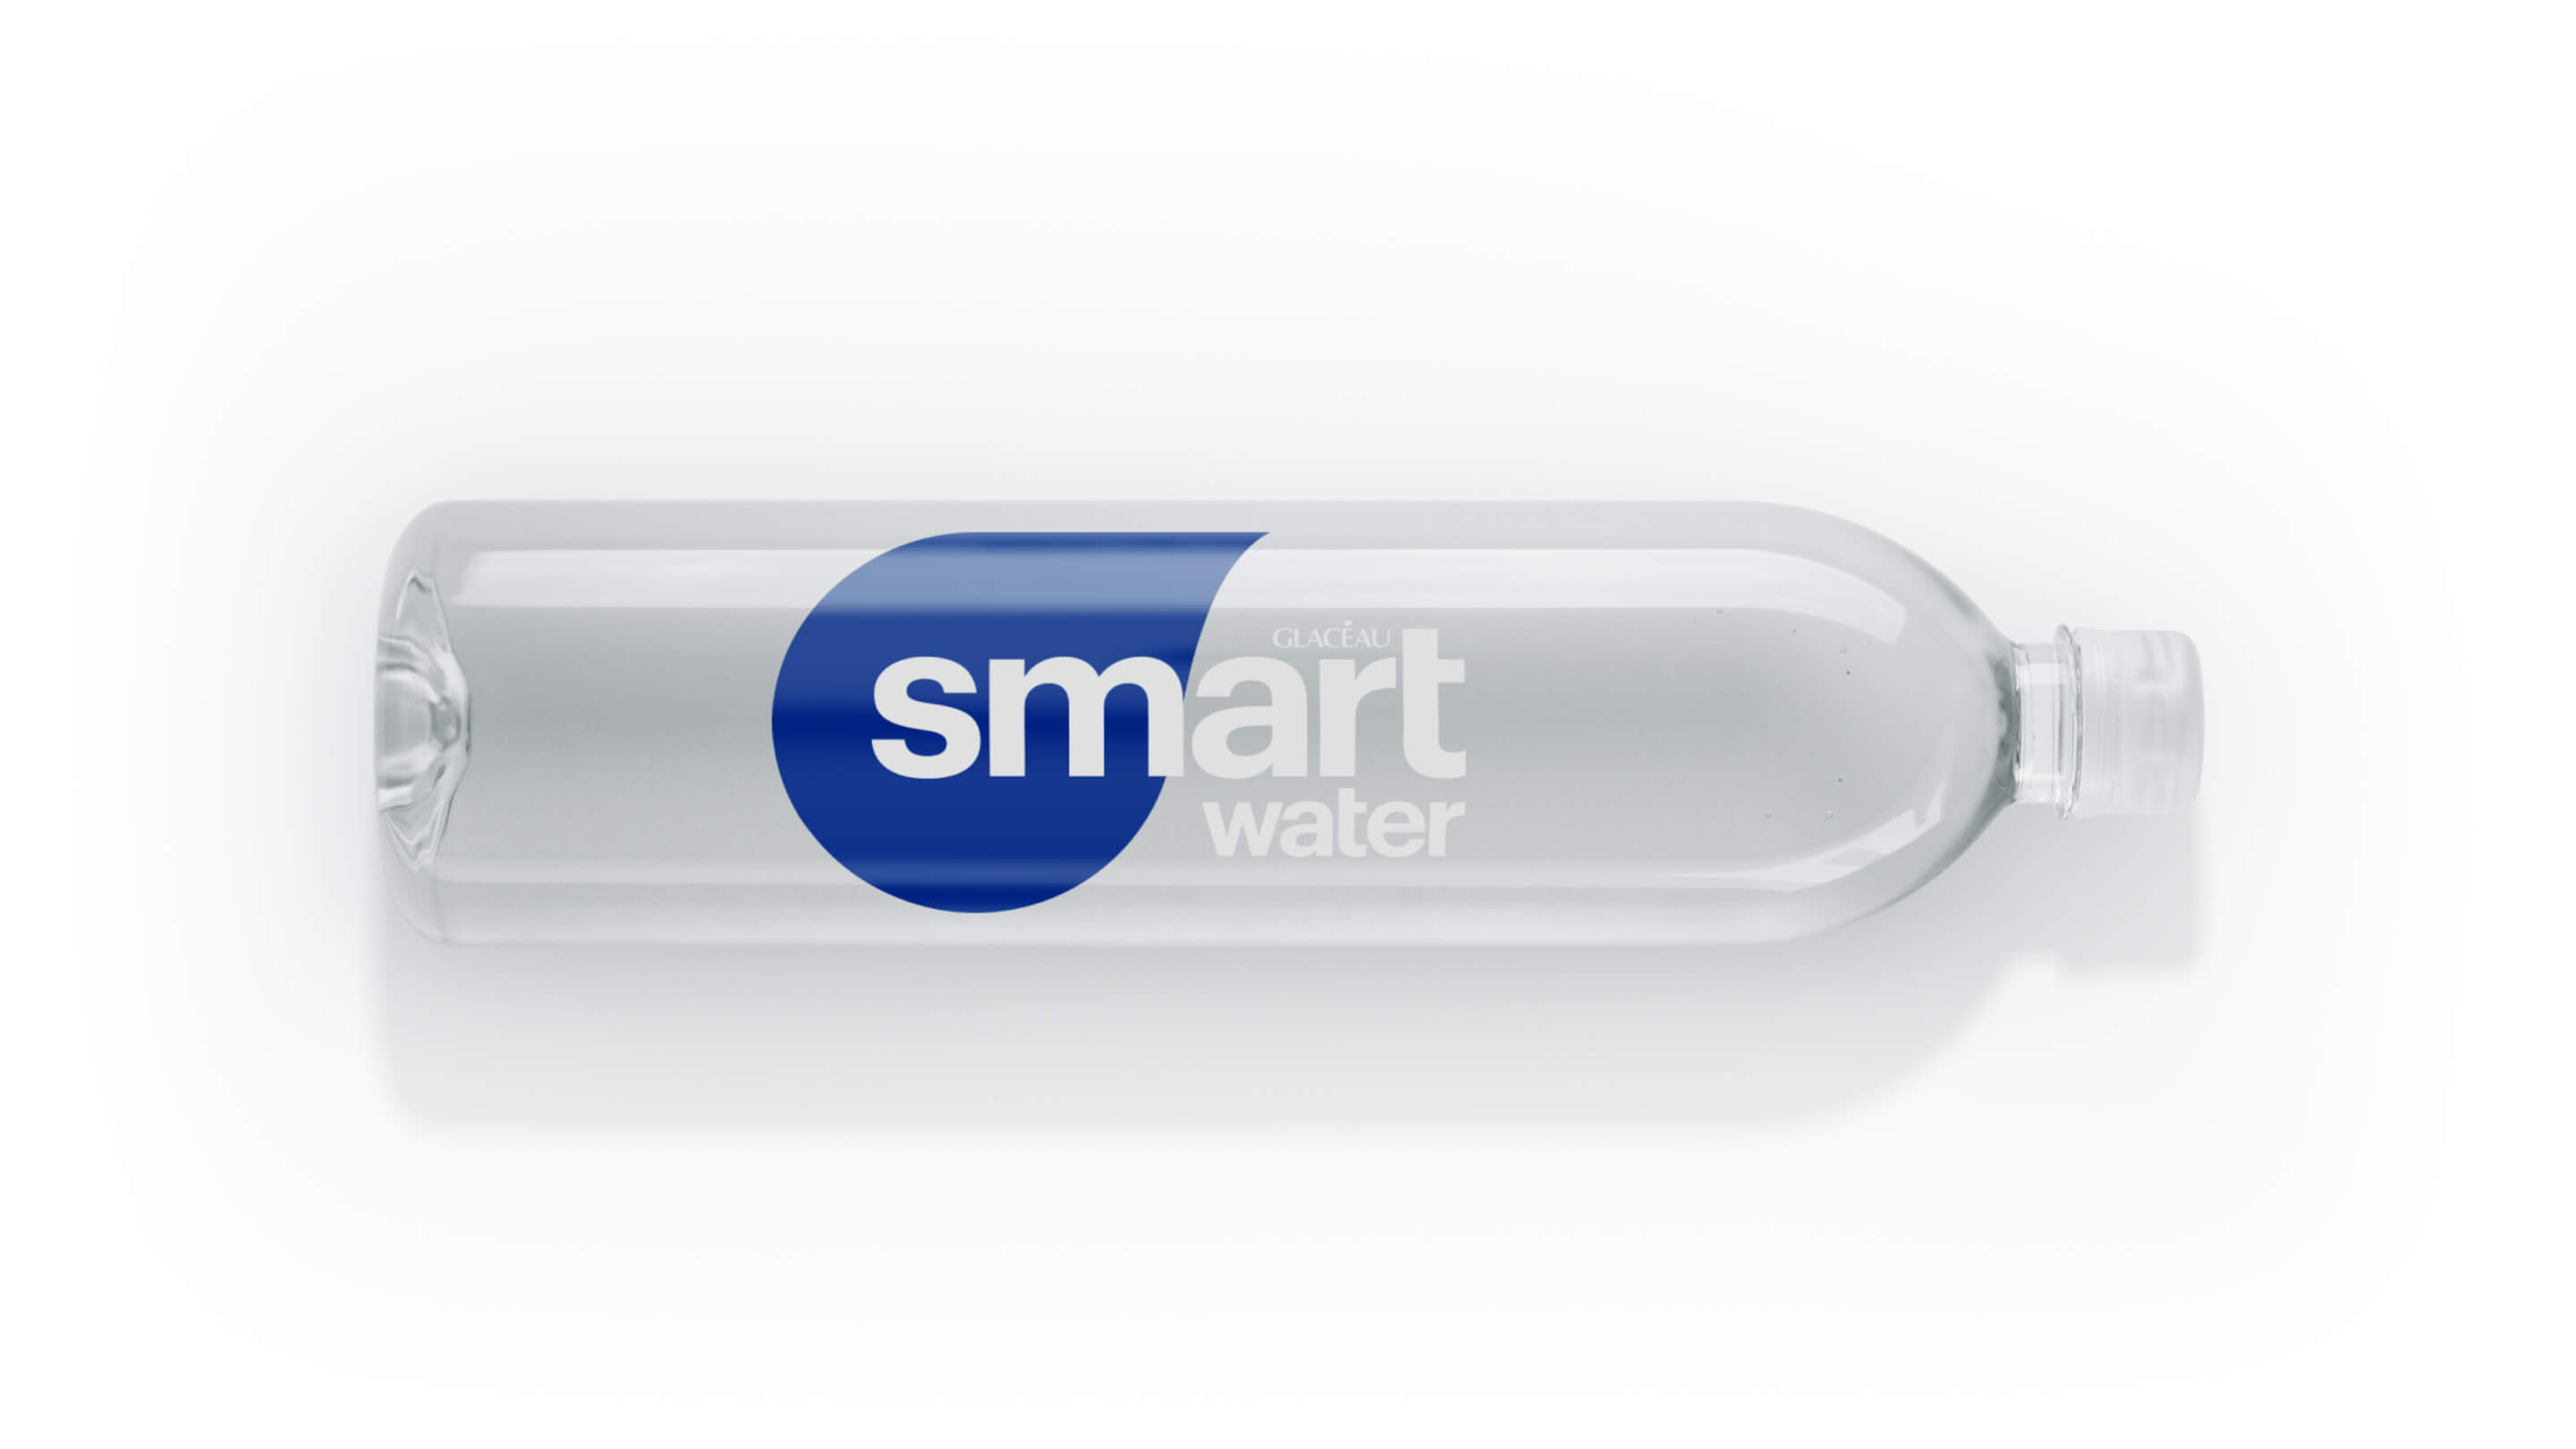 Glacéau Smartwater bottle on white background